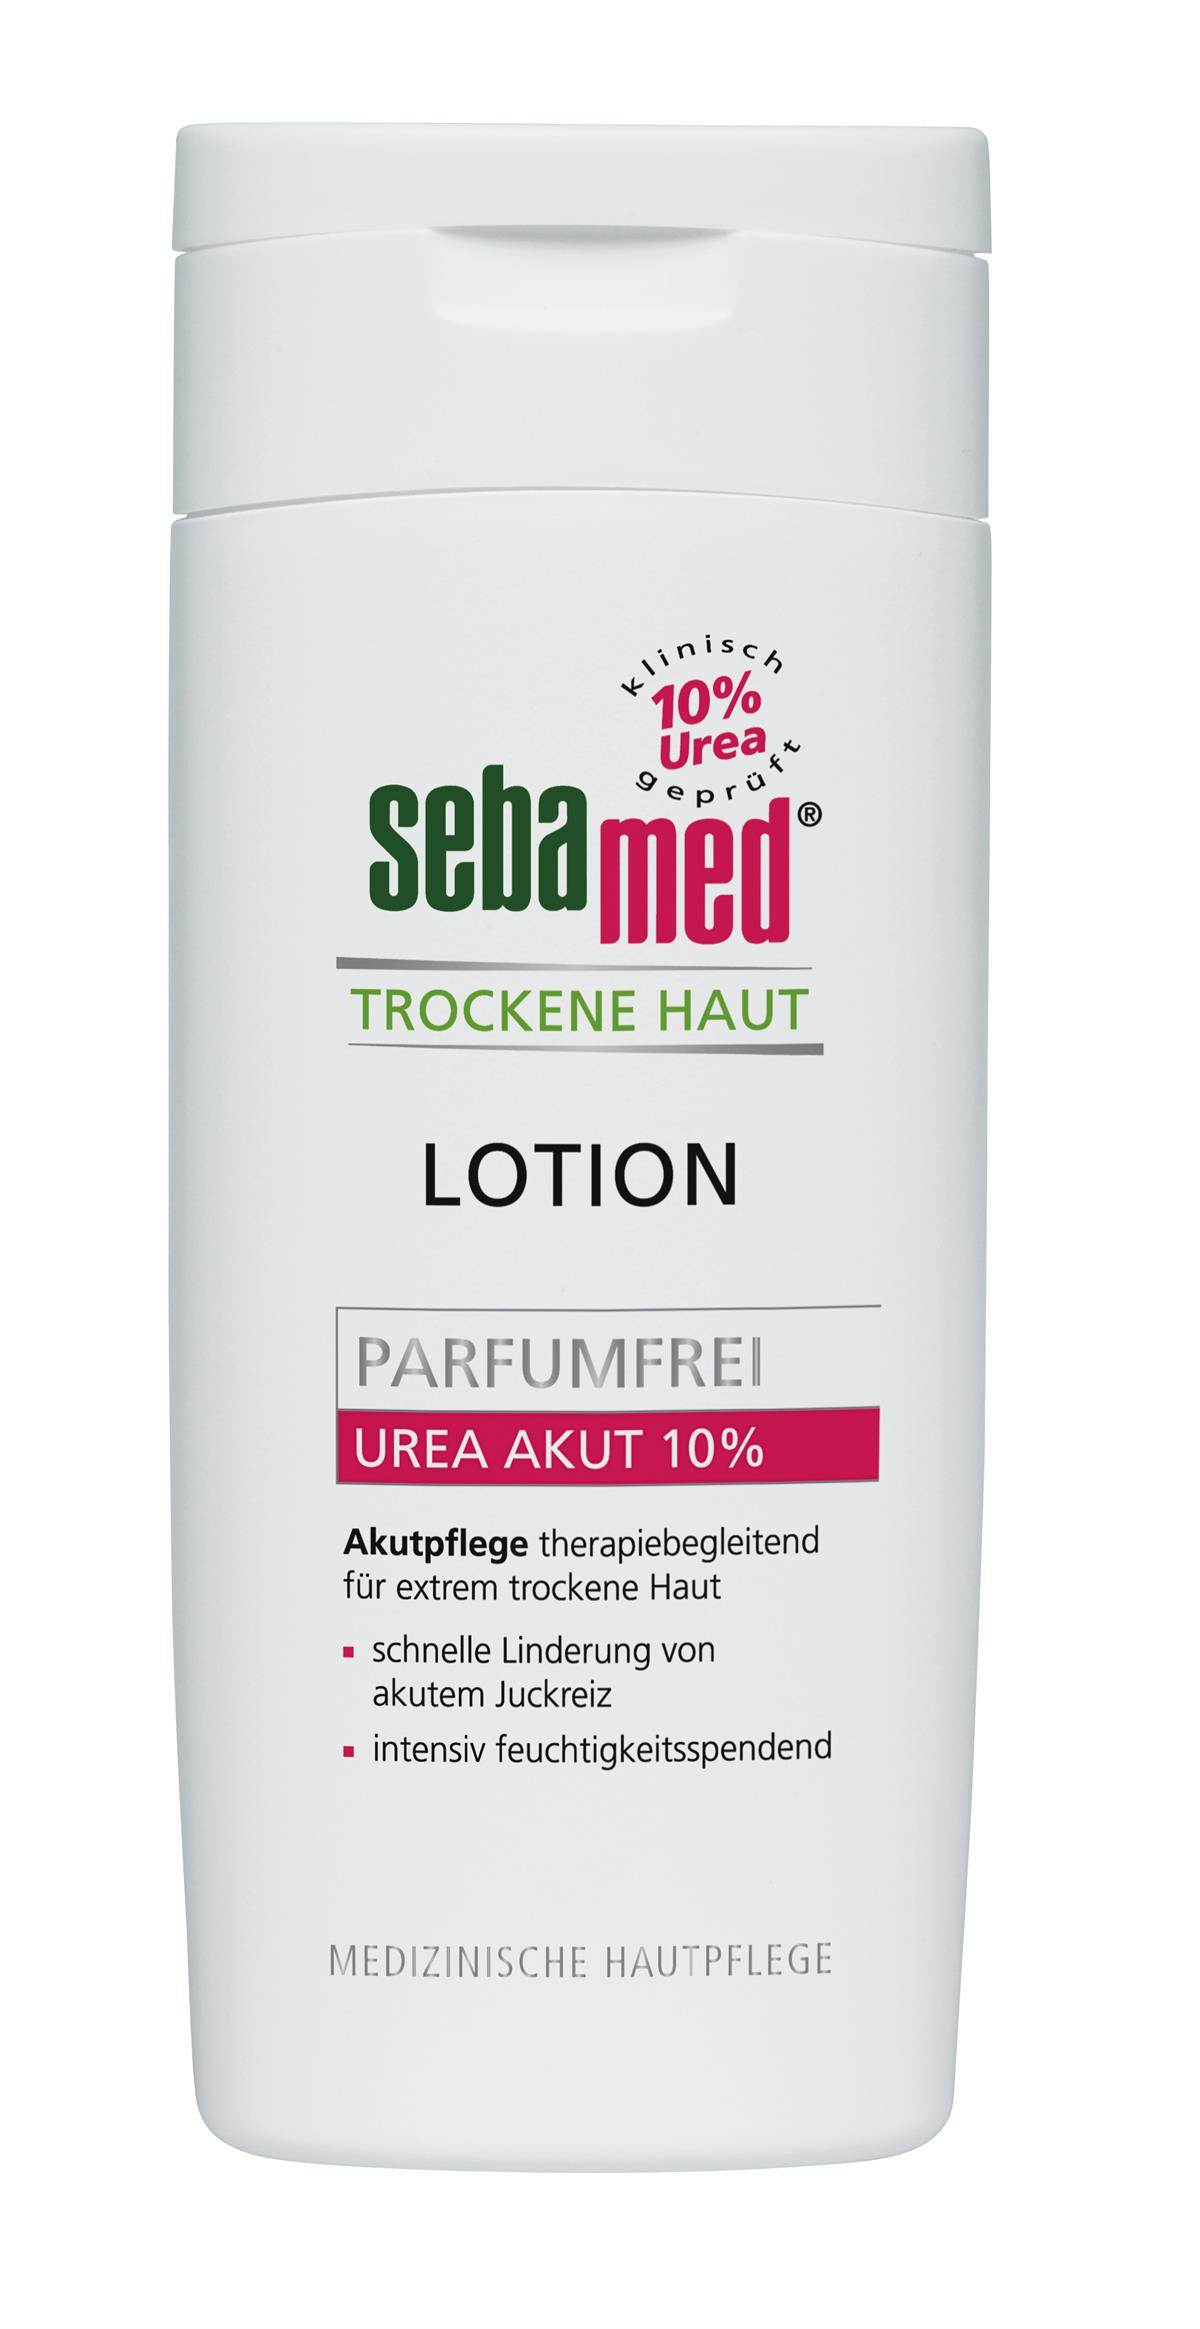 sebamed Trockene Haut Lotion Parfumfrei Urea Akut 10% (400 ml)